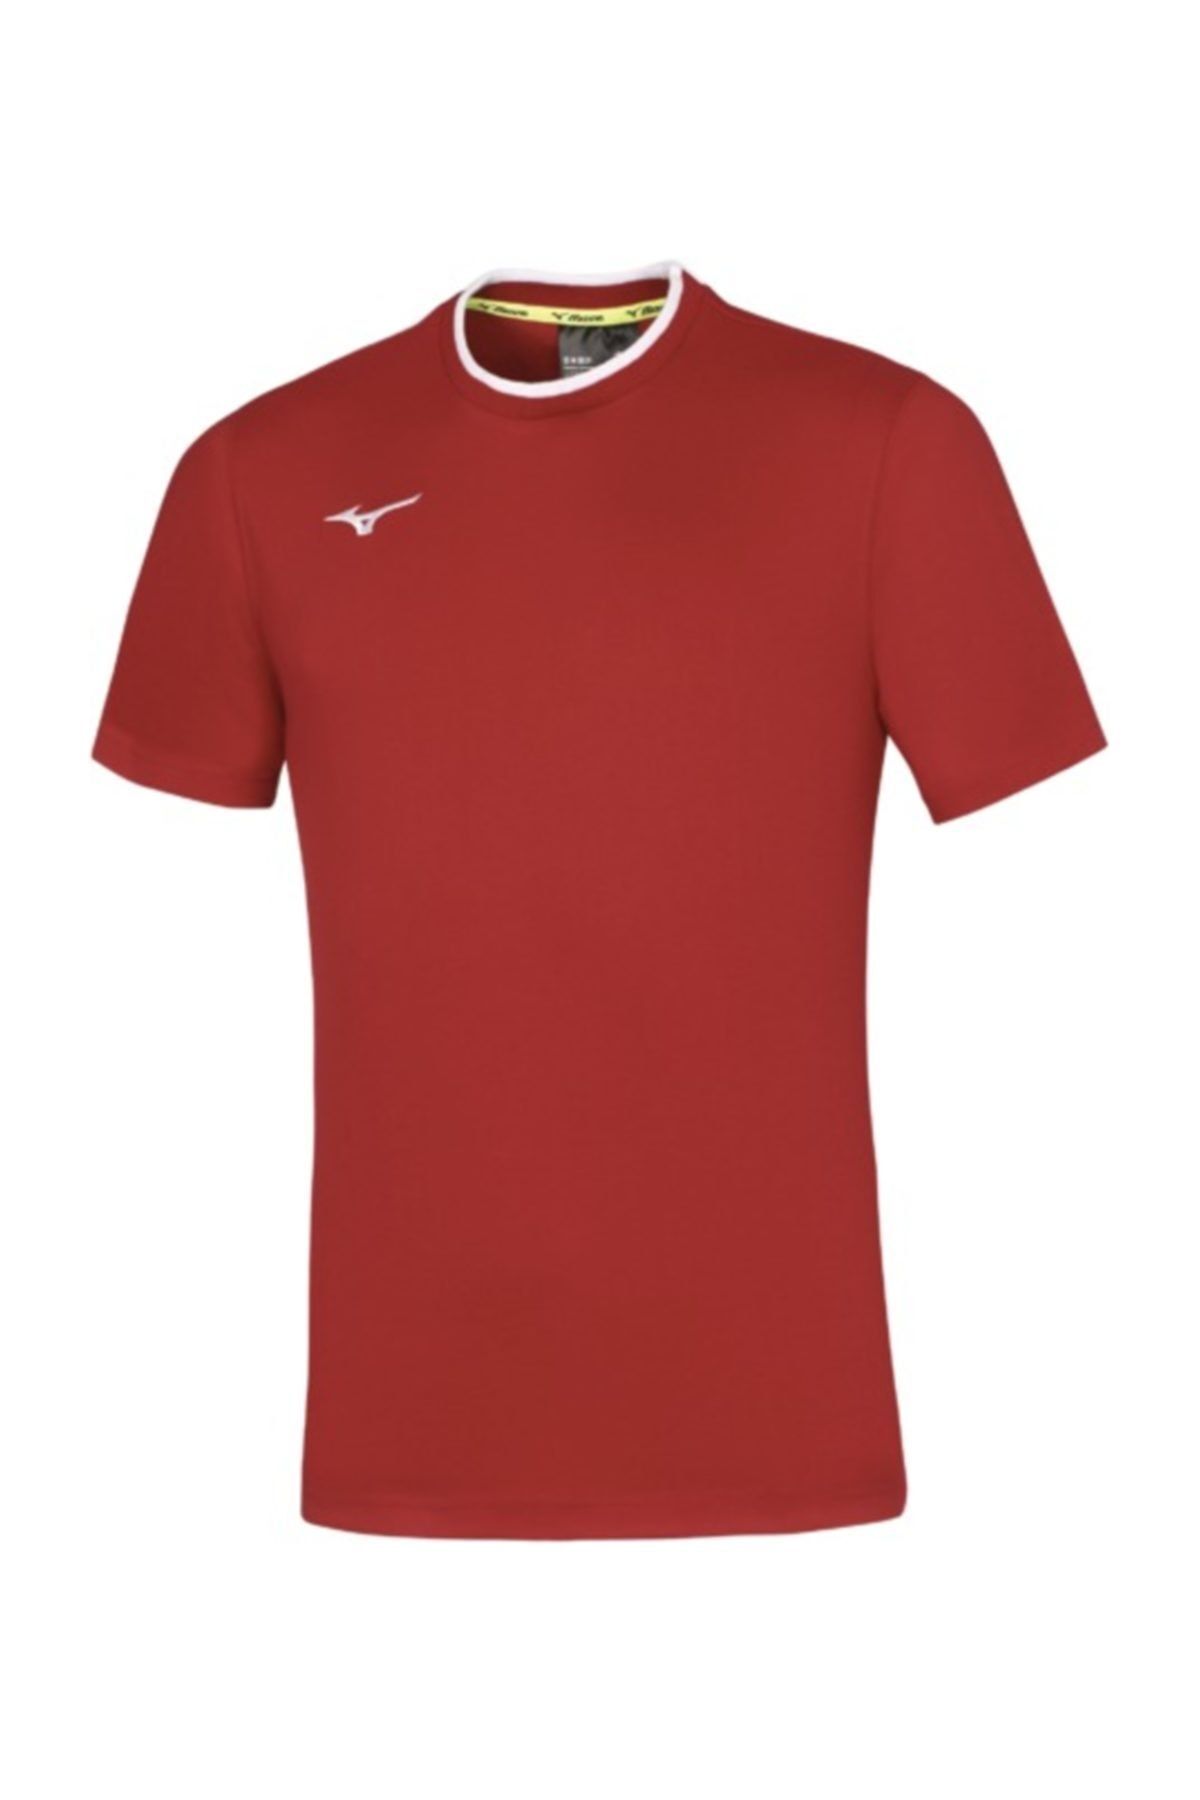 Mizuno Erkek Kırmızı T-shirt